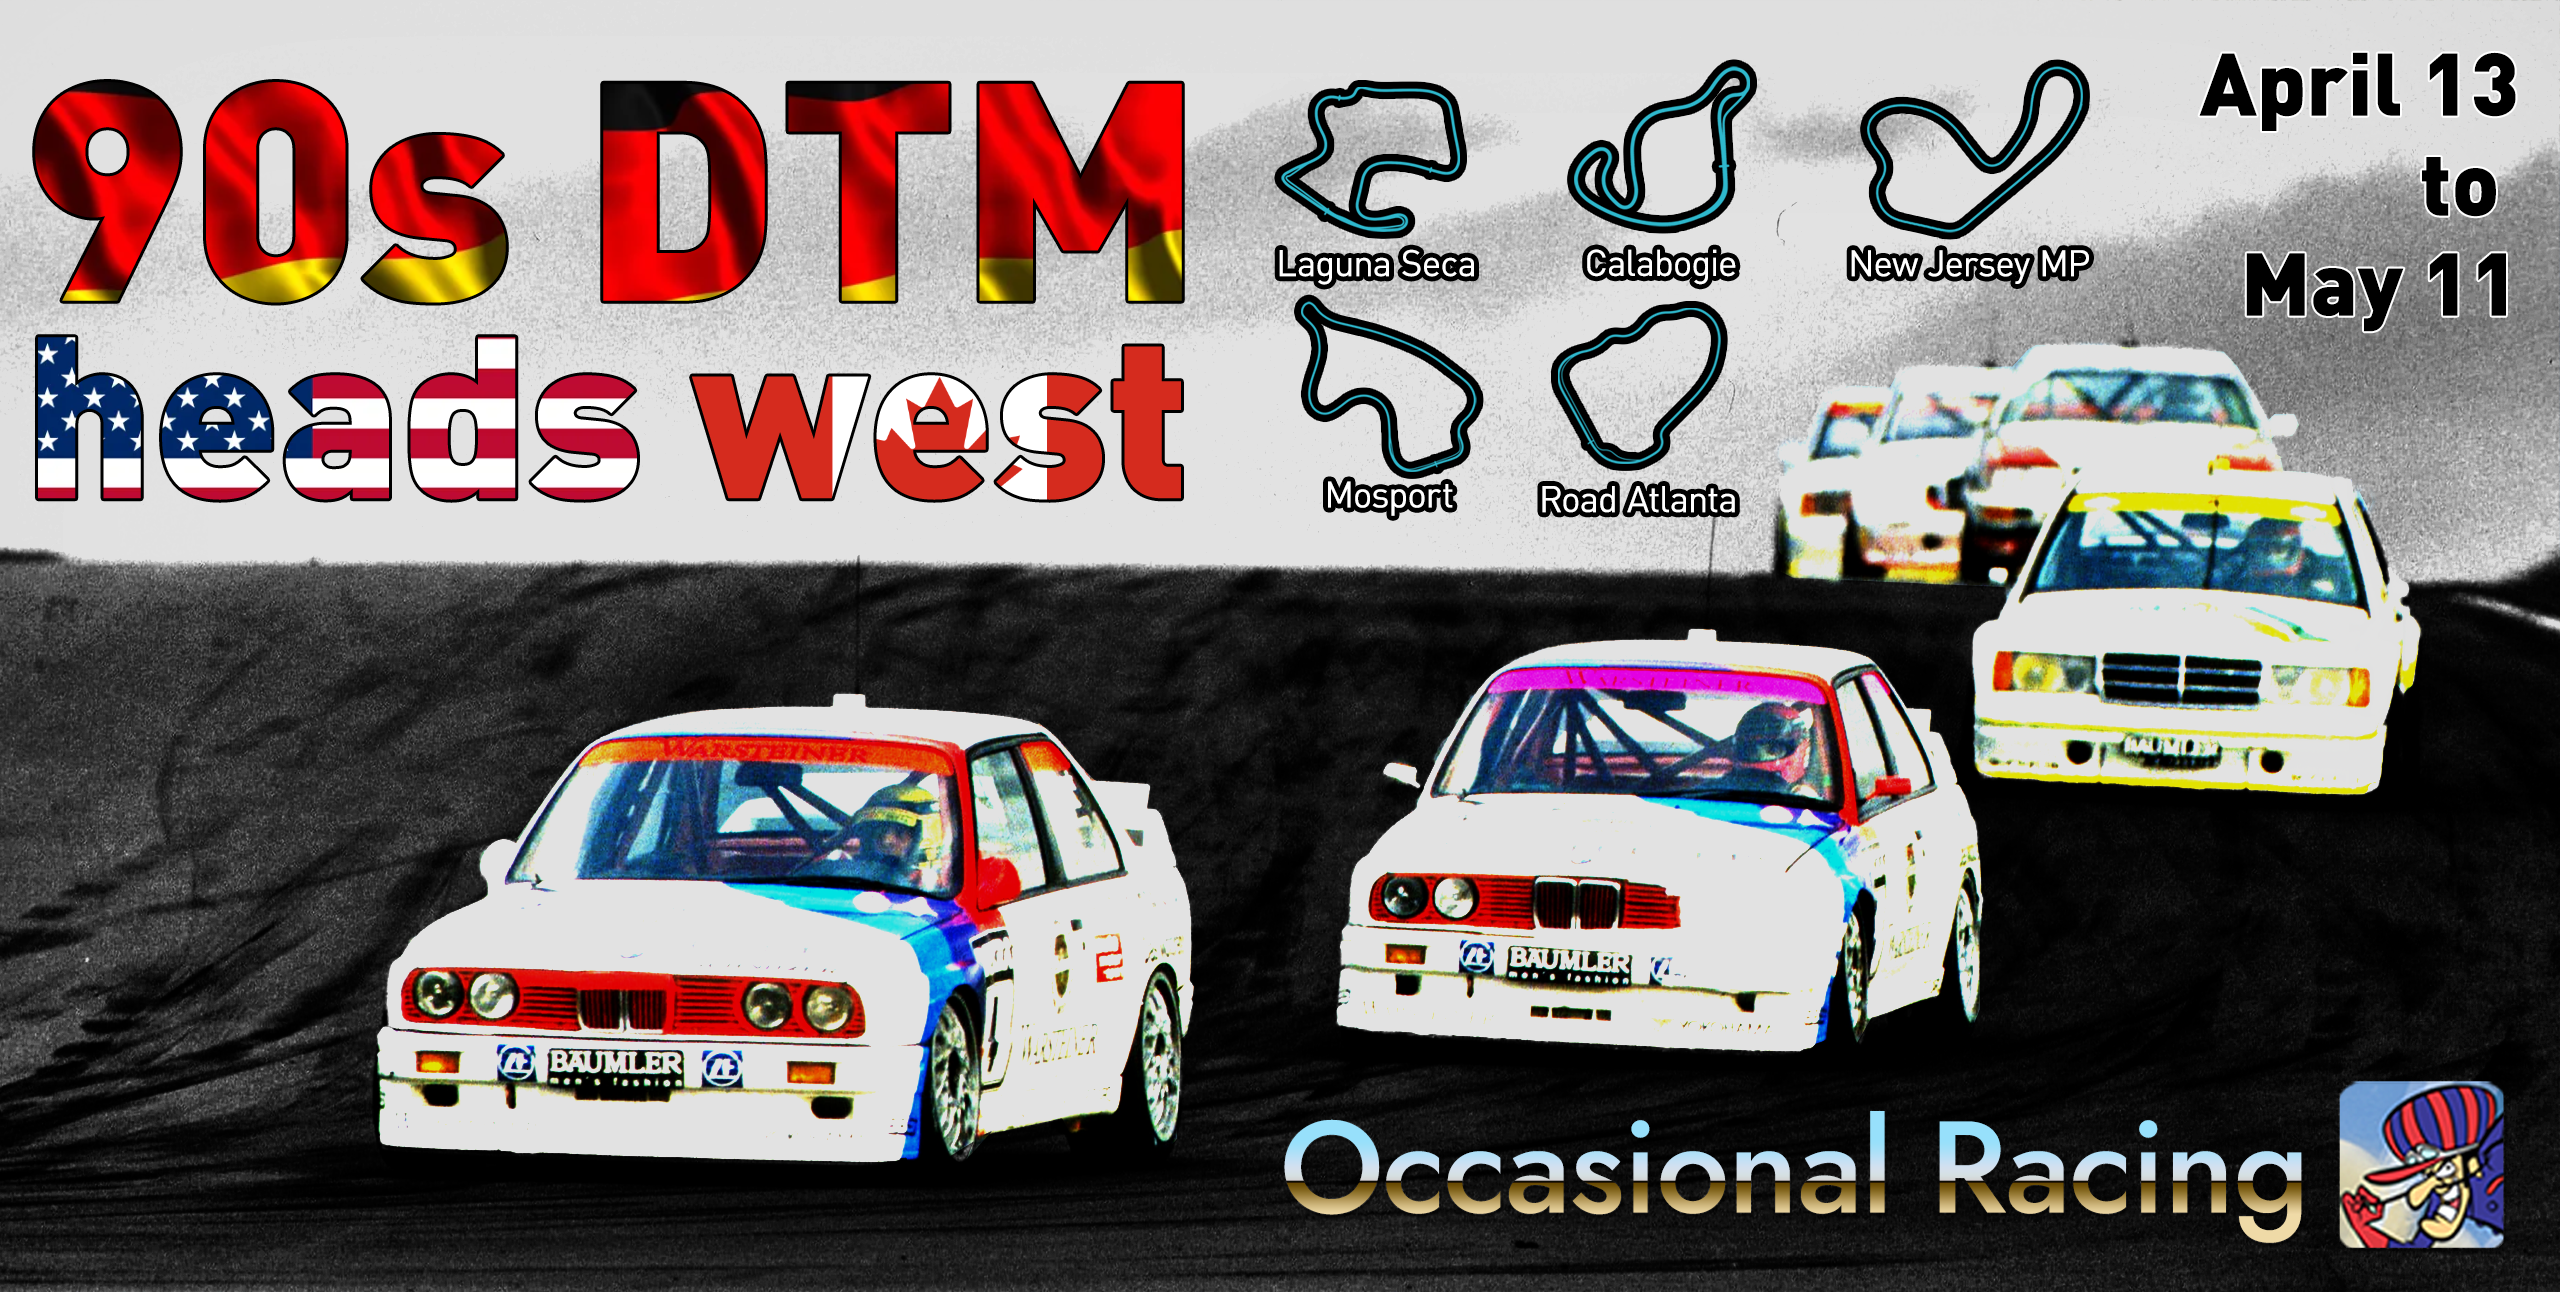 90s DTM Heads West: April 13 to May 11 at Laguna Seca, Calabogie, New Jersey Motorsports Park, Mosport and Road Atlanta.